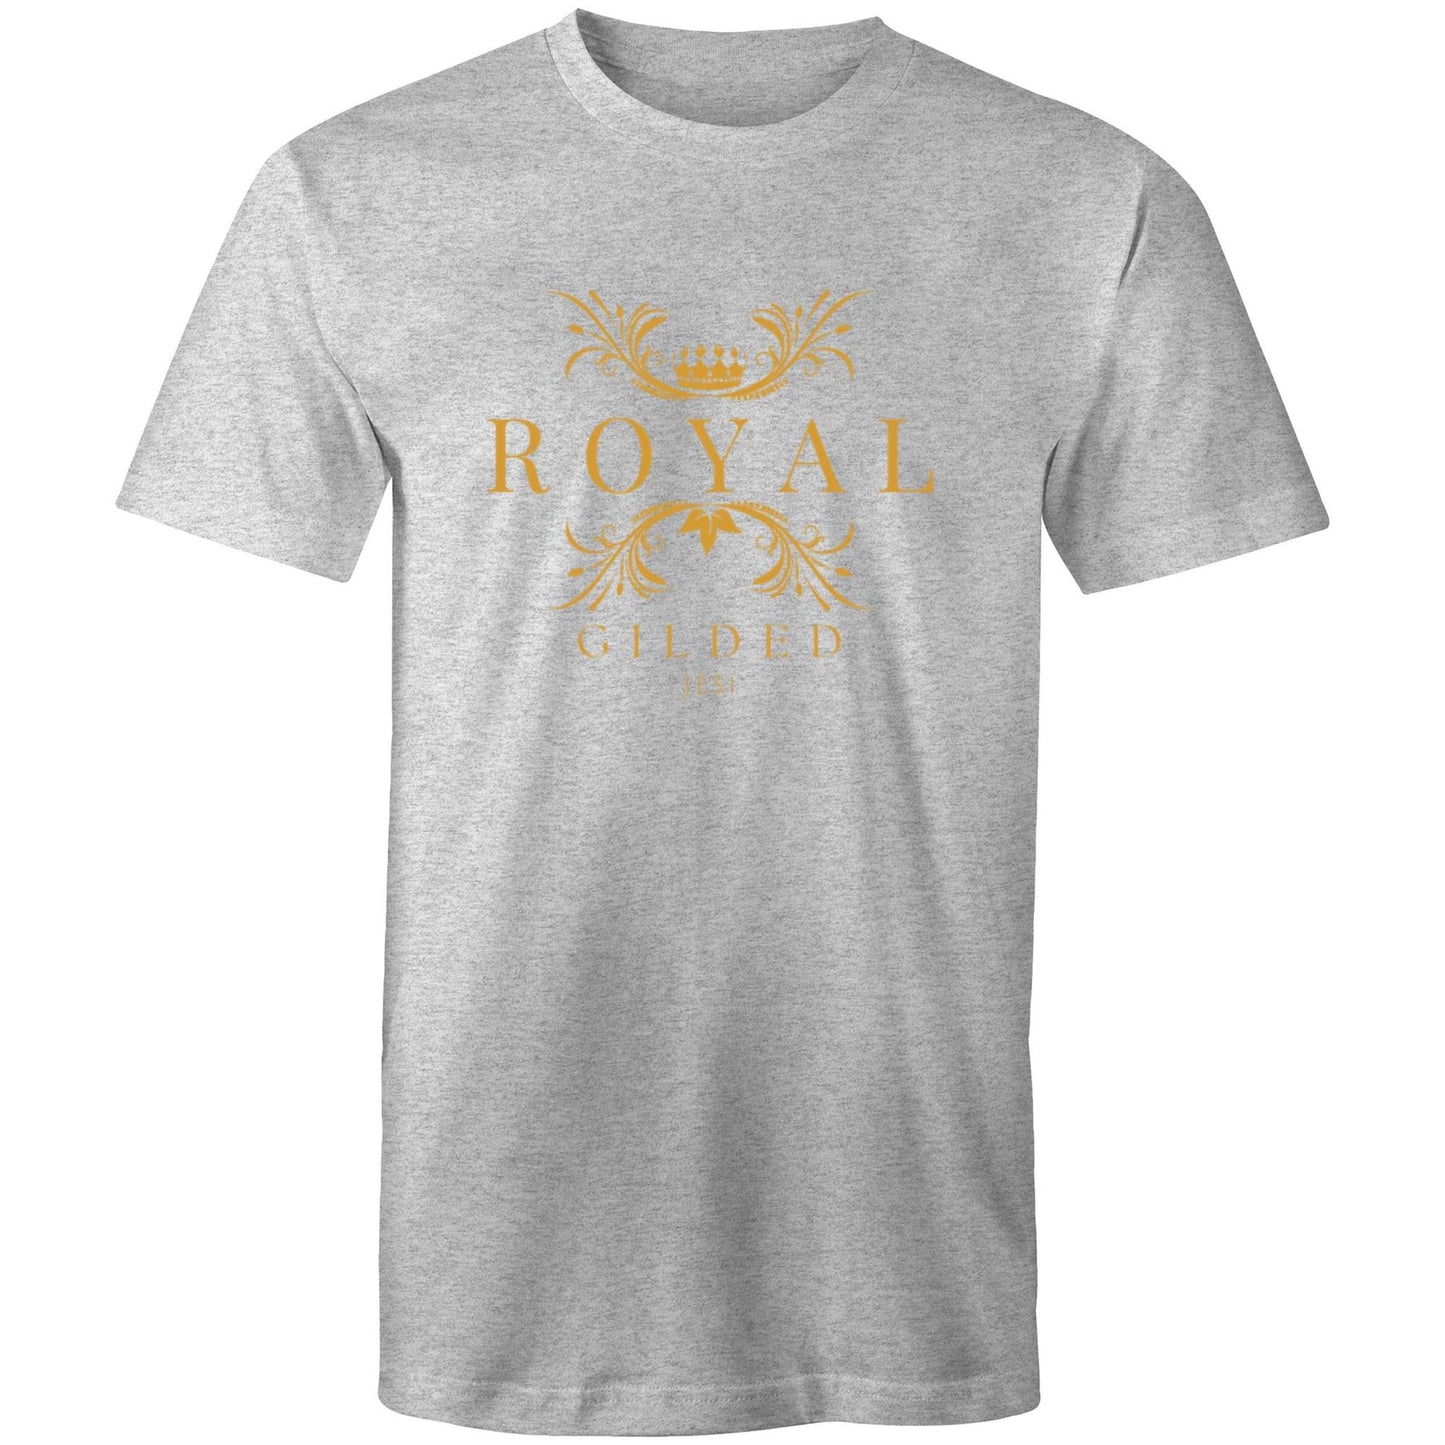 Royal Unisex Adult T-Shirt